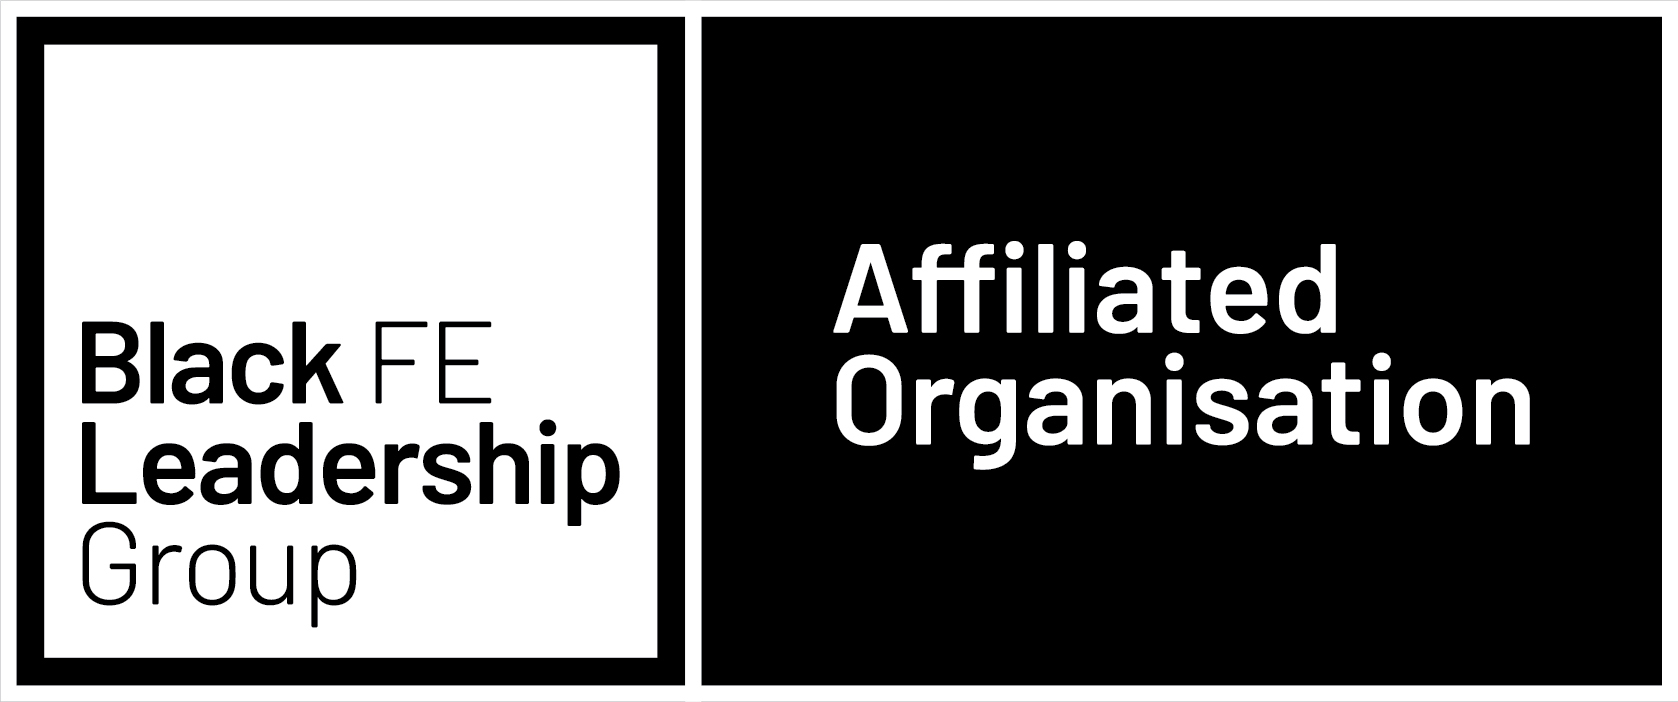 Black FE Leadership Group logo